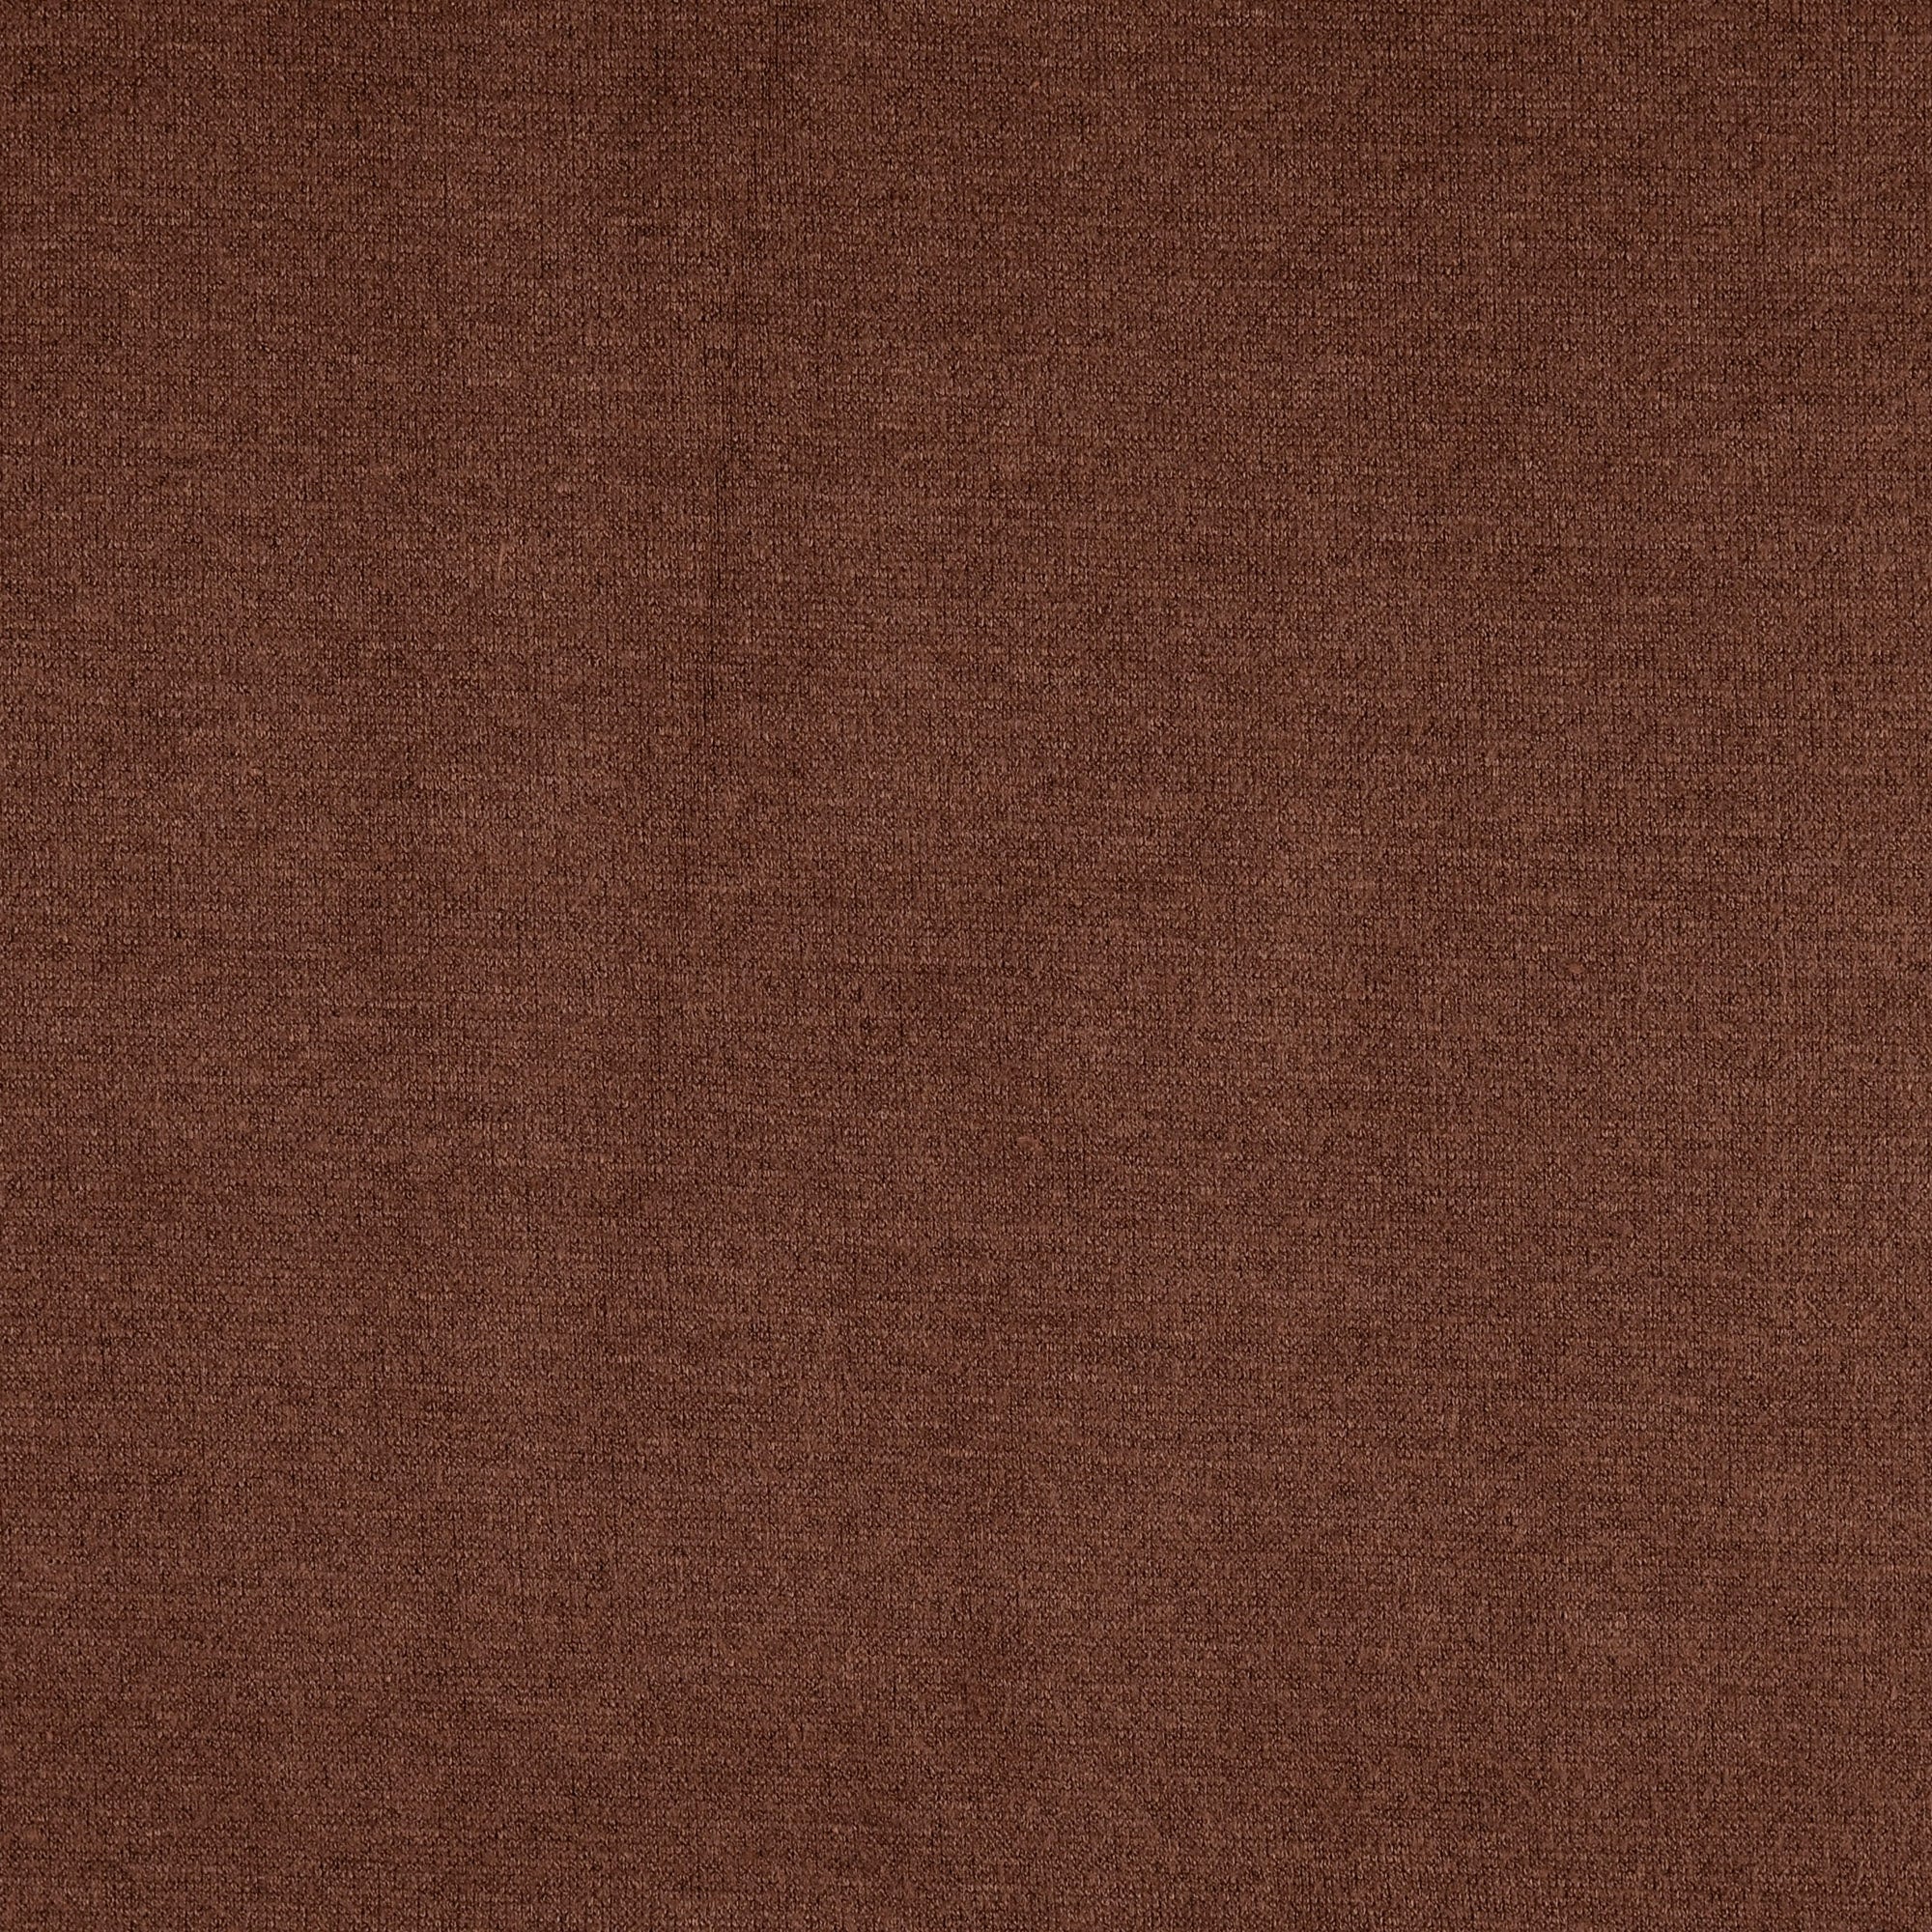 REMNANT 0.43 Metre - Snug Viscose Blend Sweater Knit in Brown